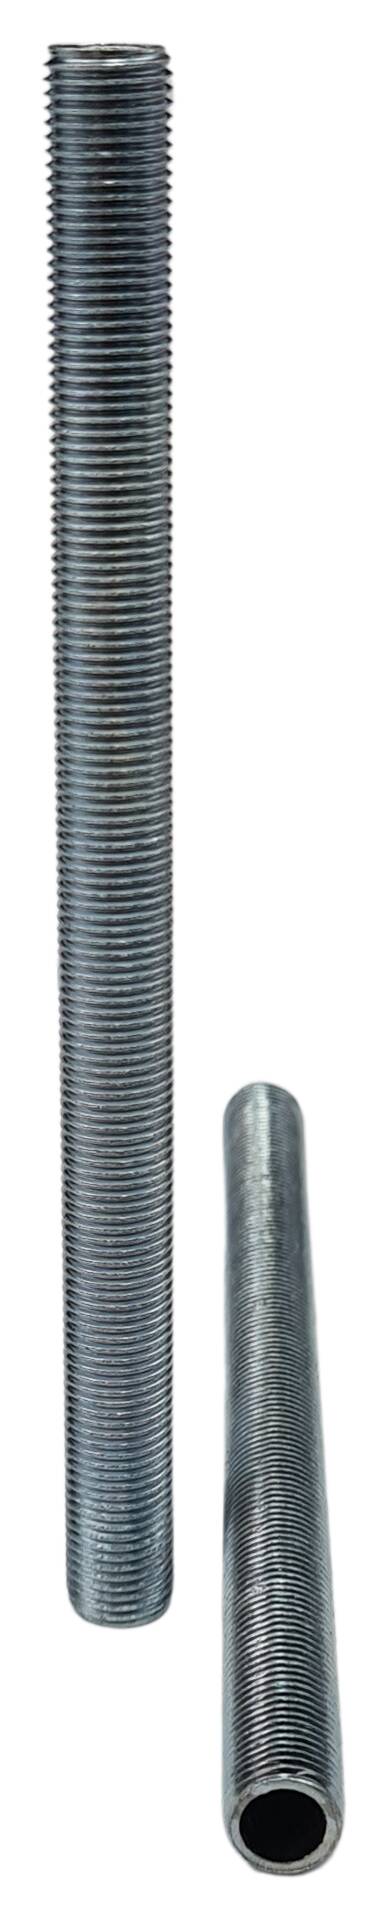 iron thread tube M10x1x140 round zinc